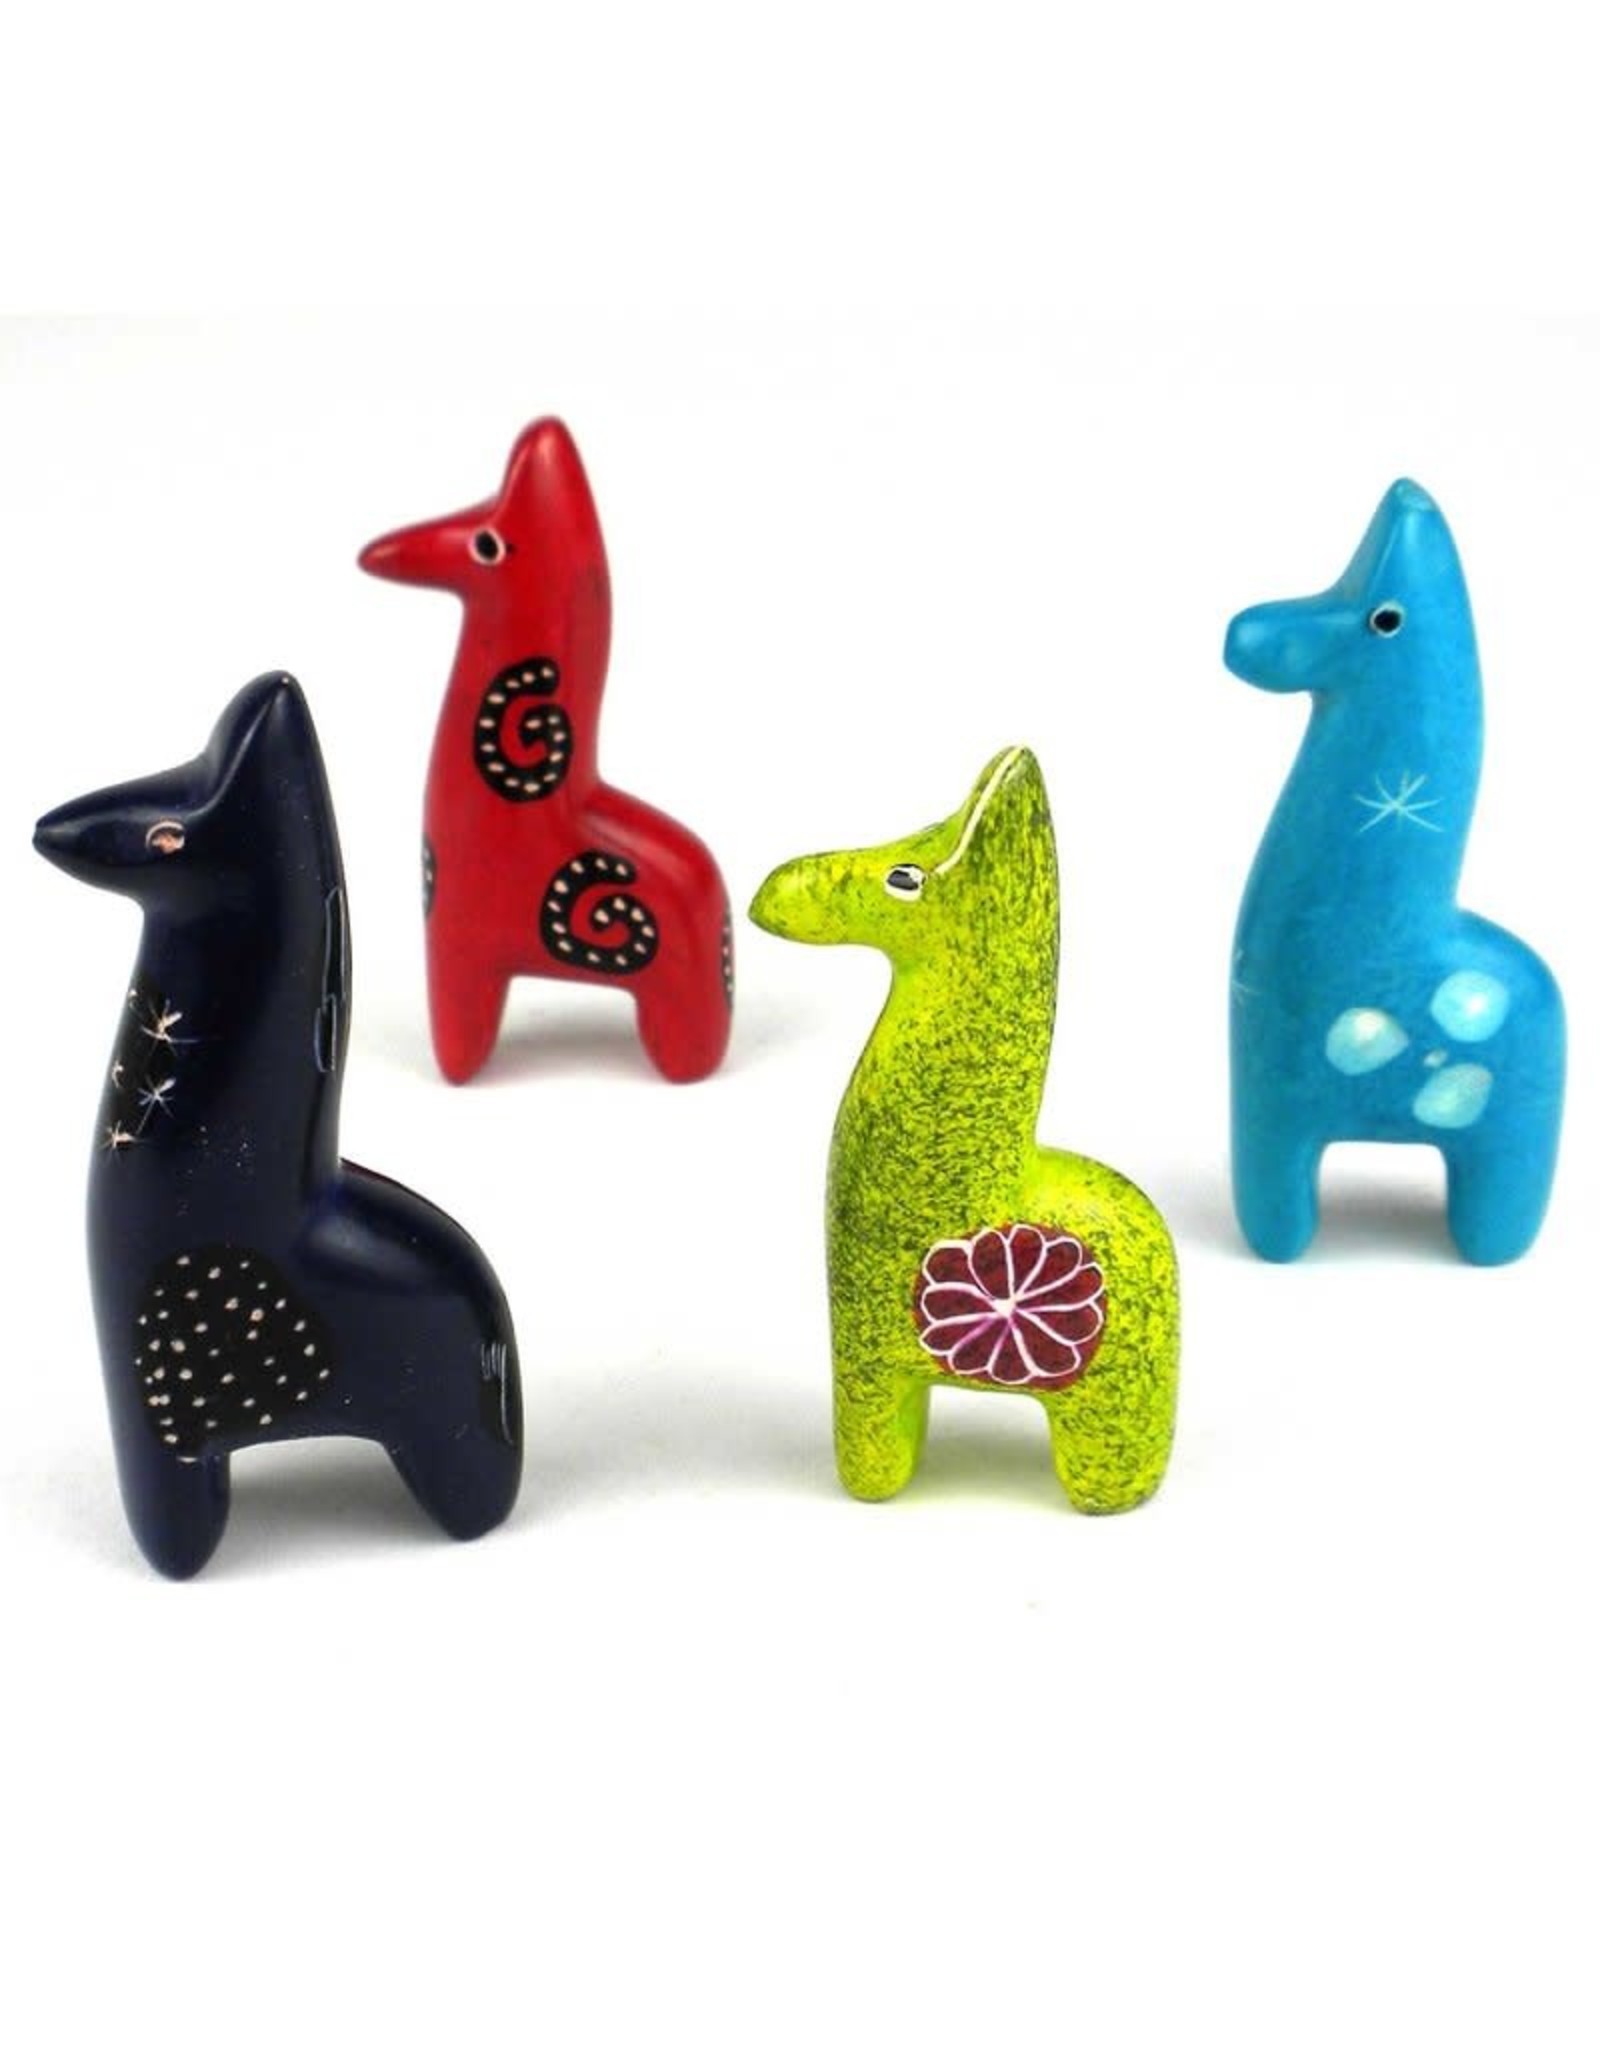 Global Crafts Tiny Flat Giraffes - Kisii Stone 1.5 - 2"